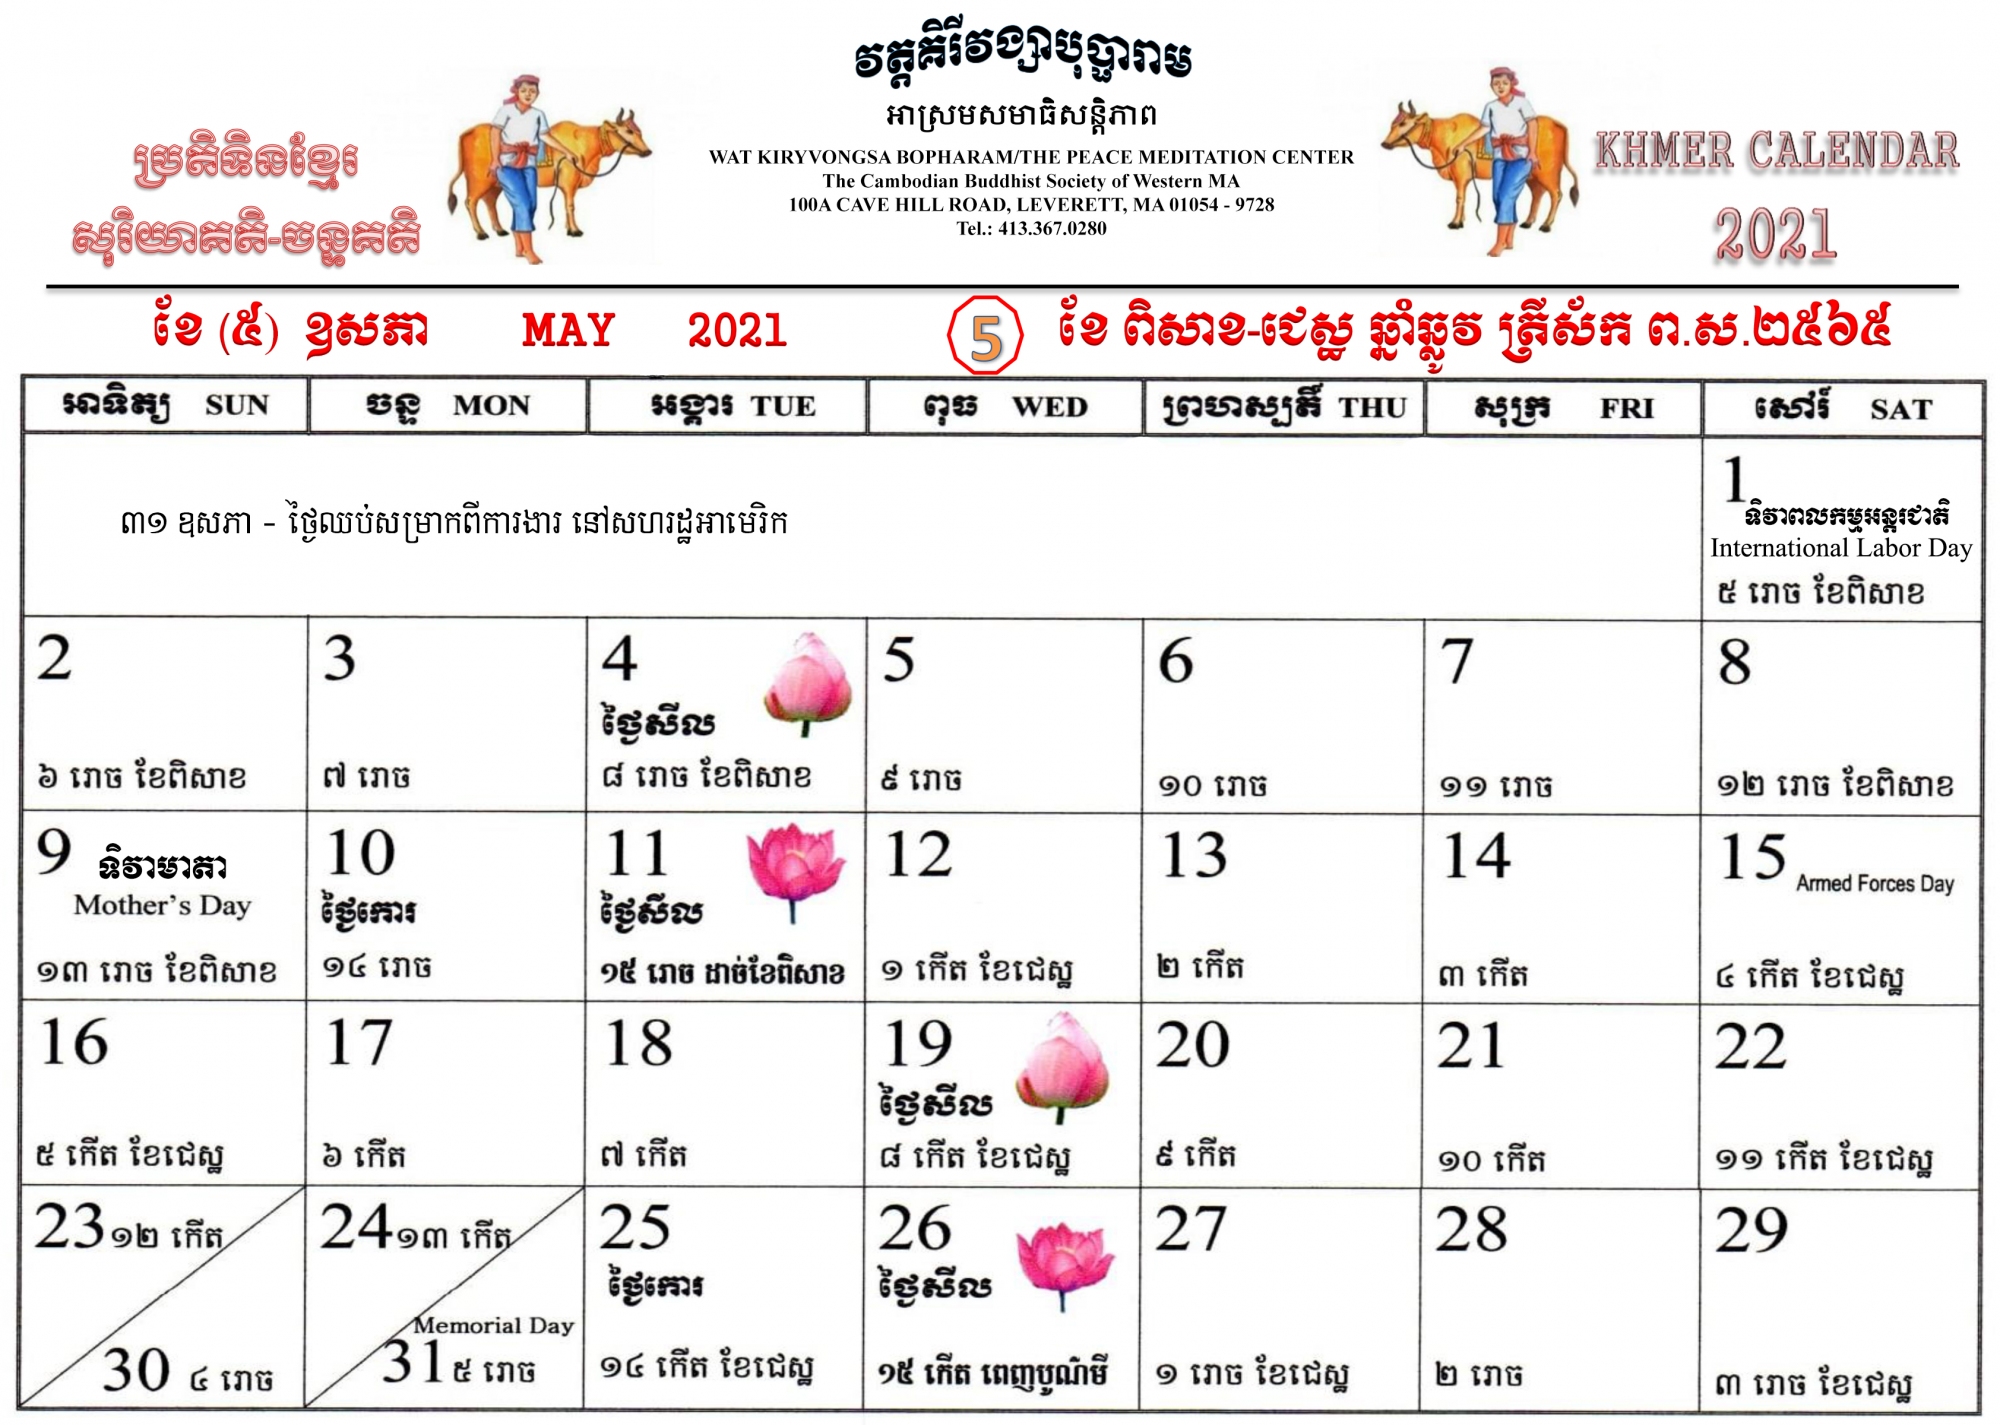 Free Copy: The 2565 2021 Khmer Calendar - Templenews